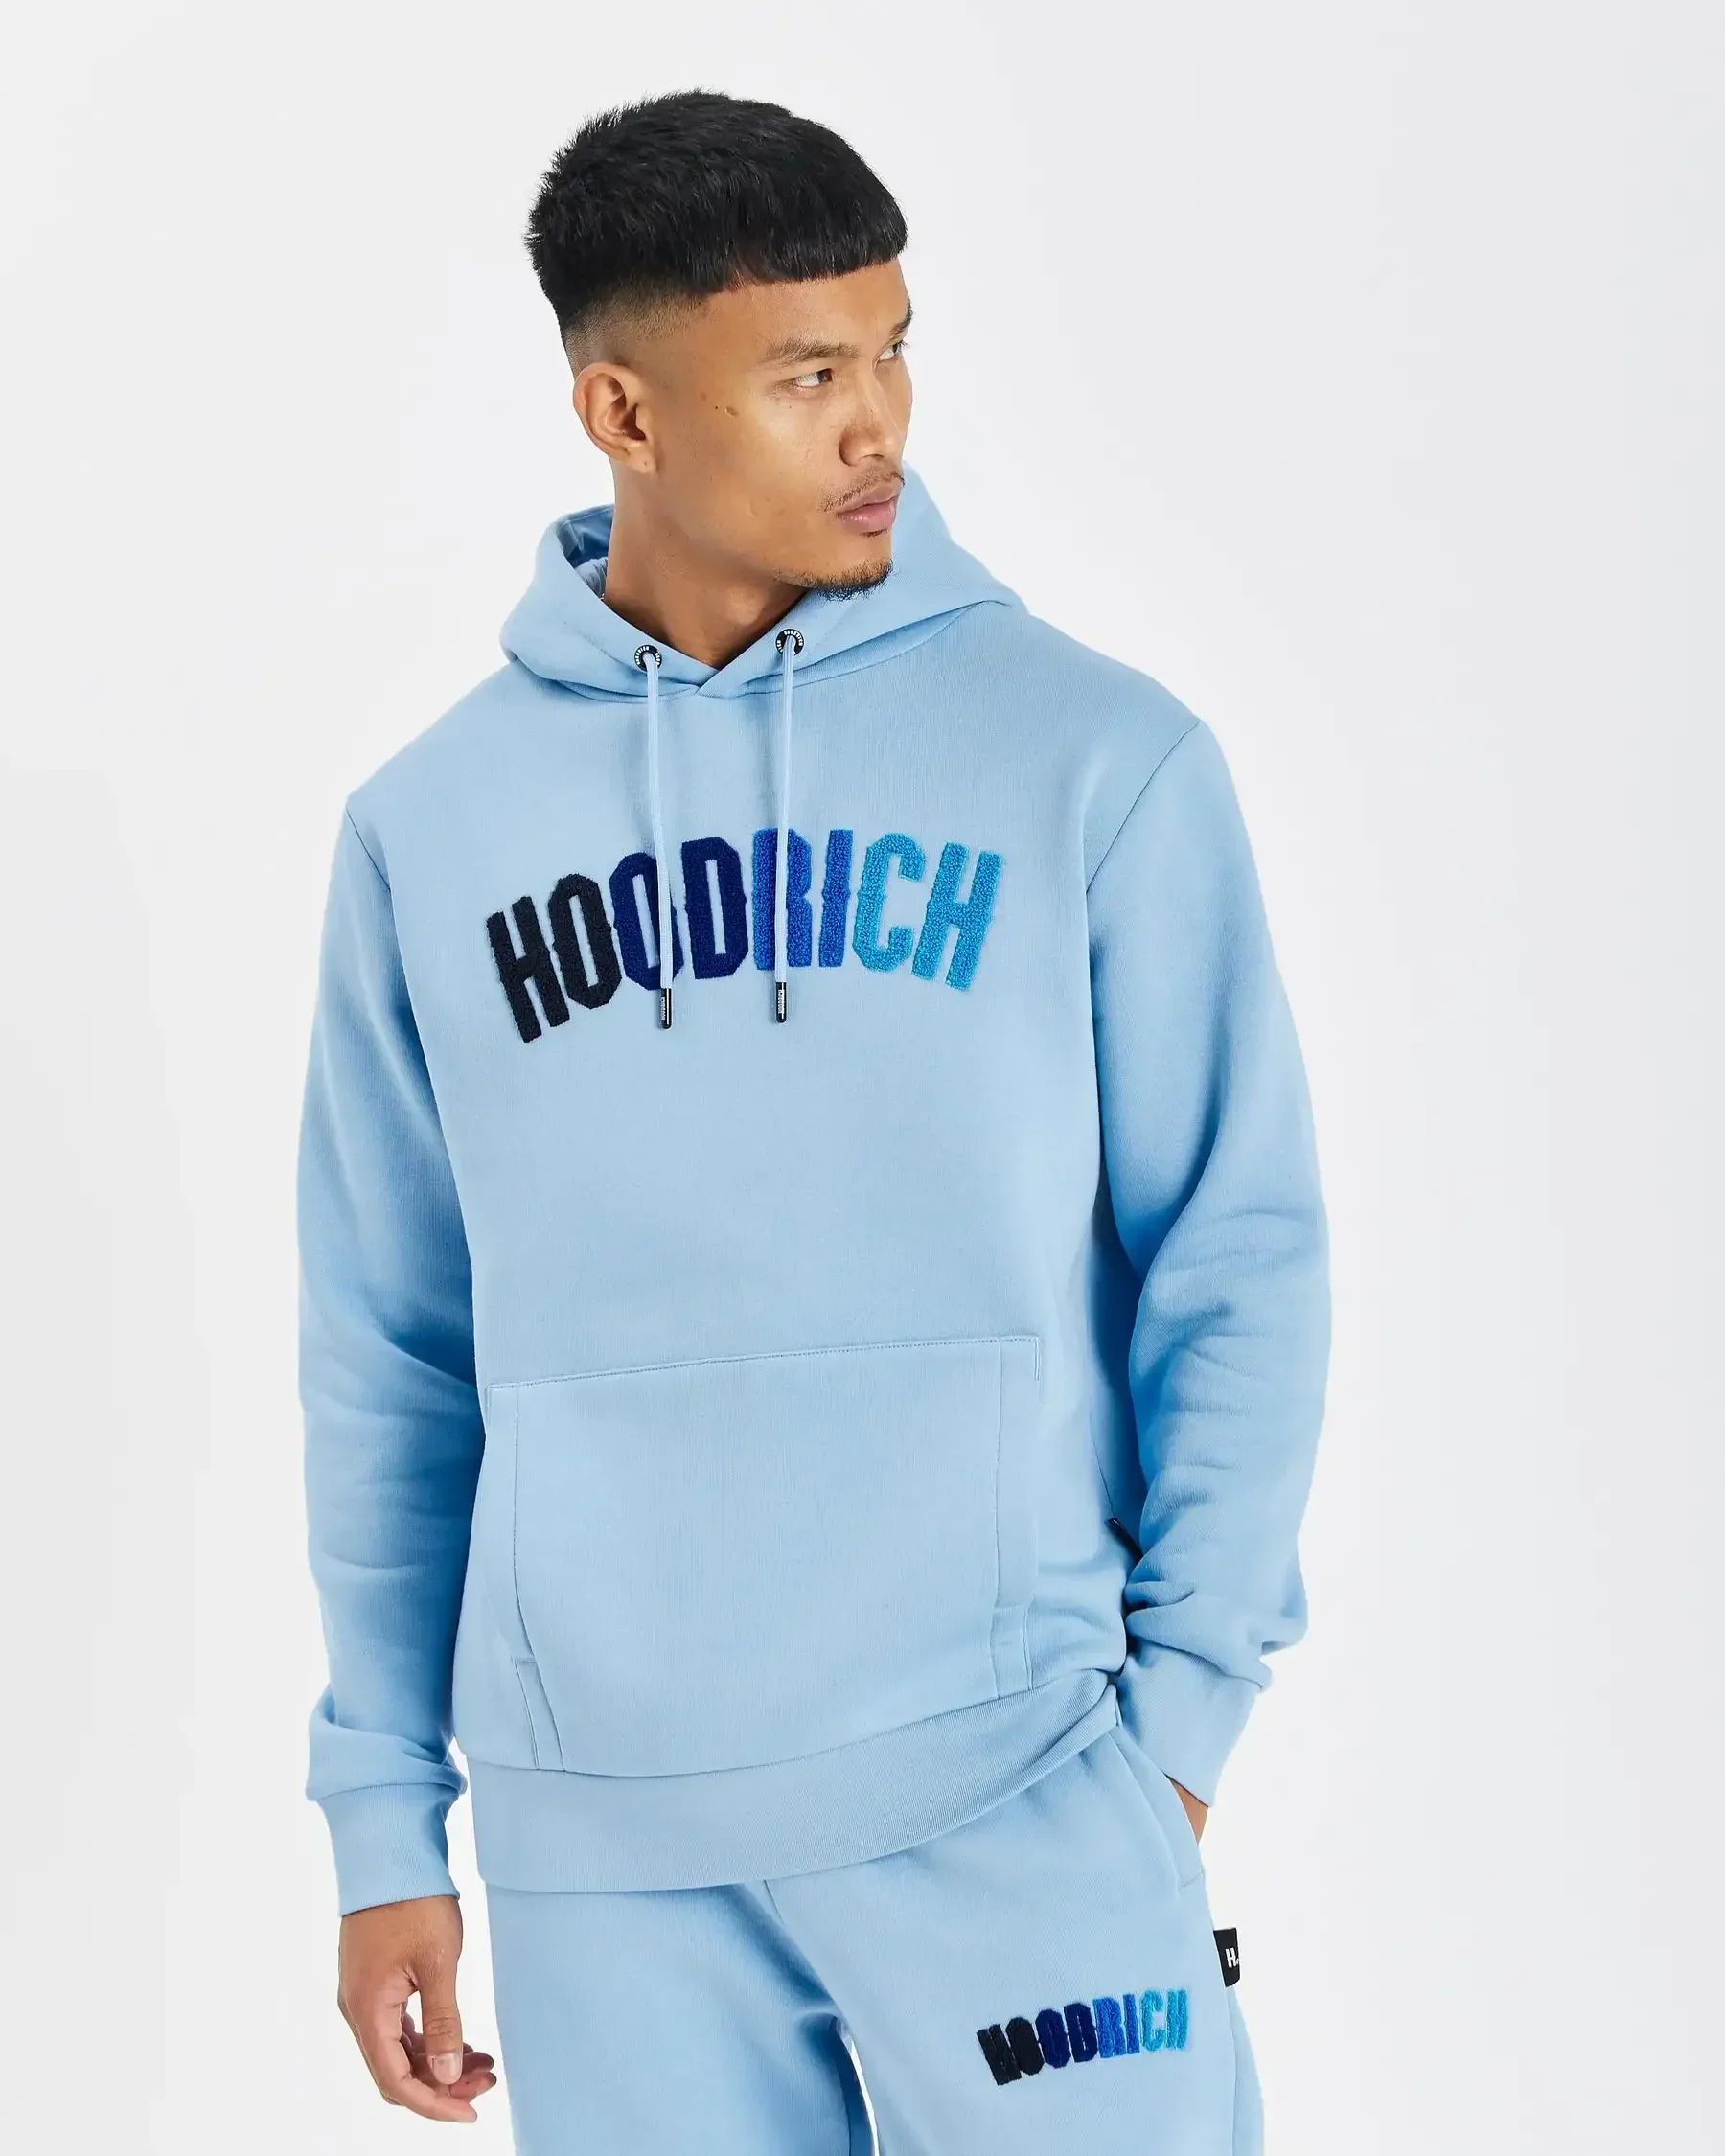 

2023 Winter Hoodrich Hoodies for Men Letter Embroidery Sweatshirt HOODRIICH Tracksuit LONDON UK Driill Hoodies Male Clothes